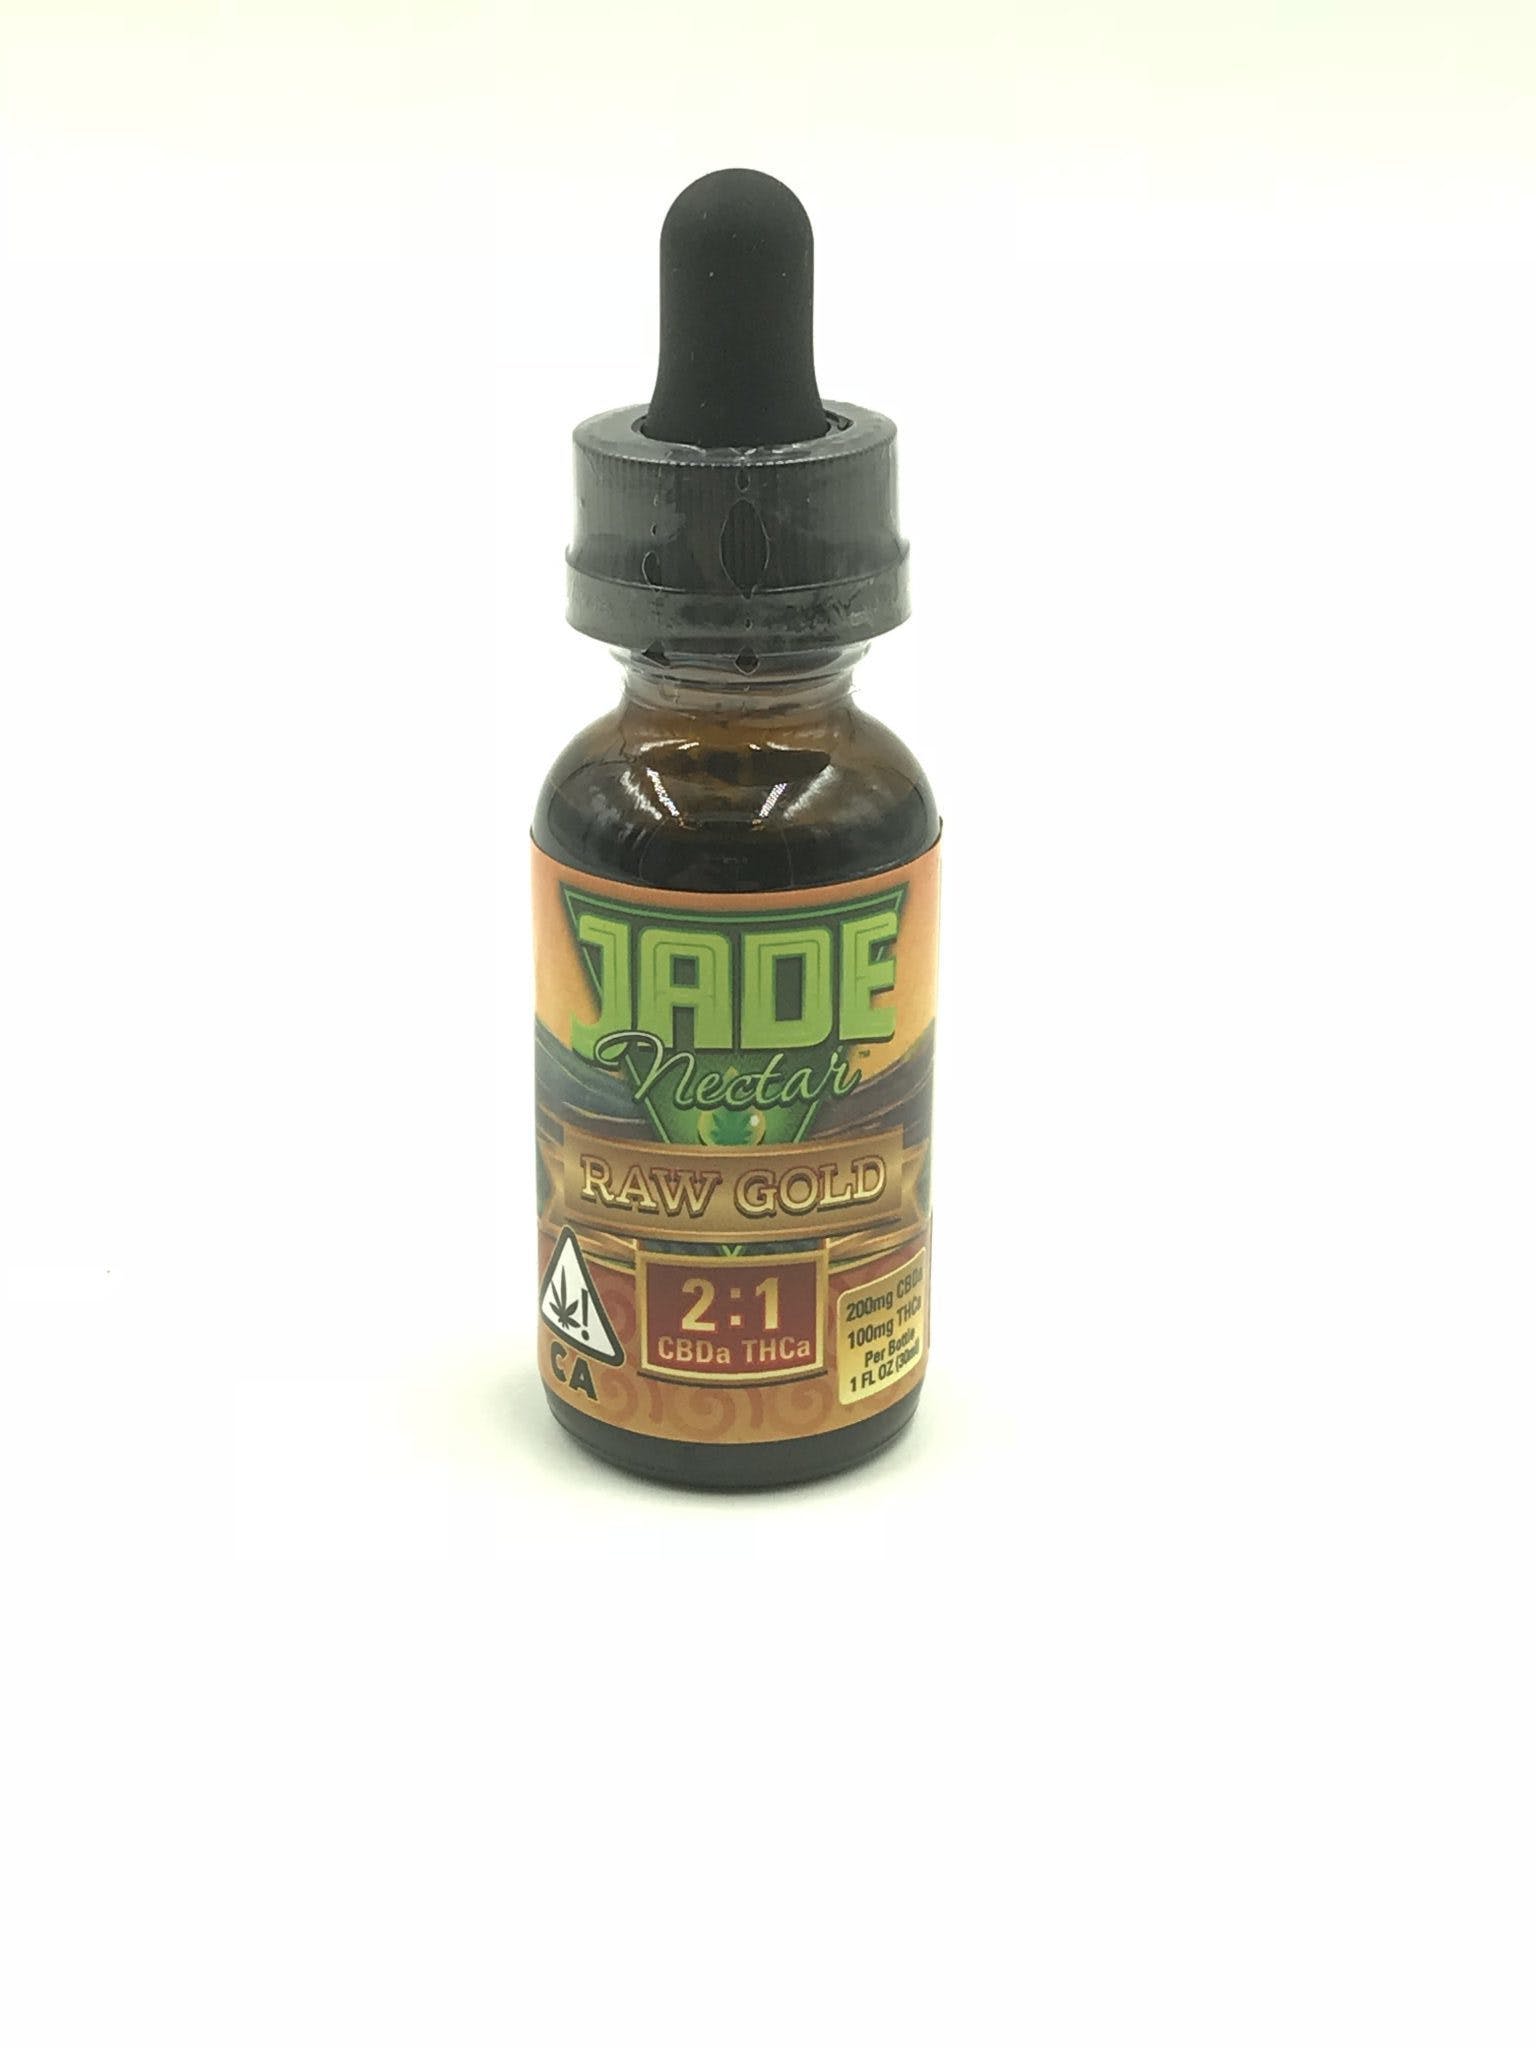 Jade Nectar Raw Gold - 2:1